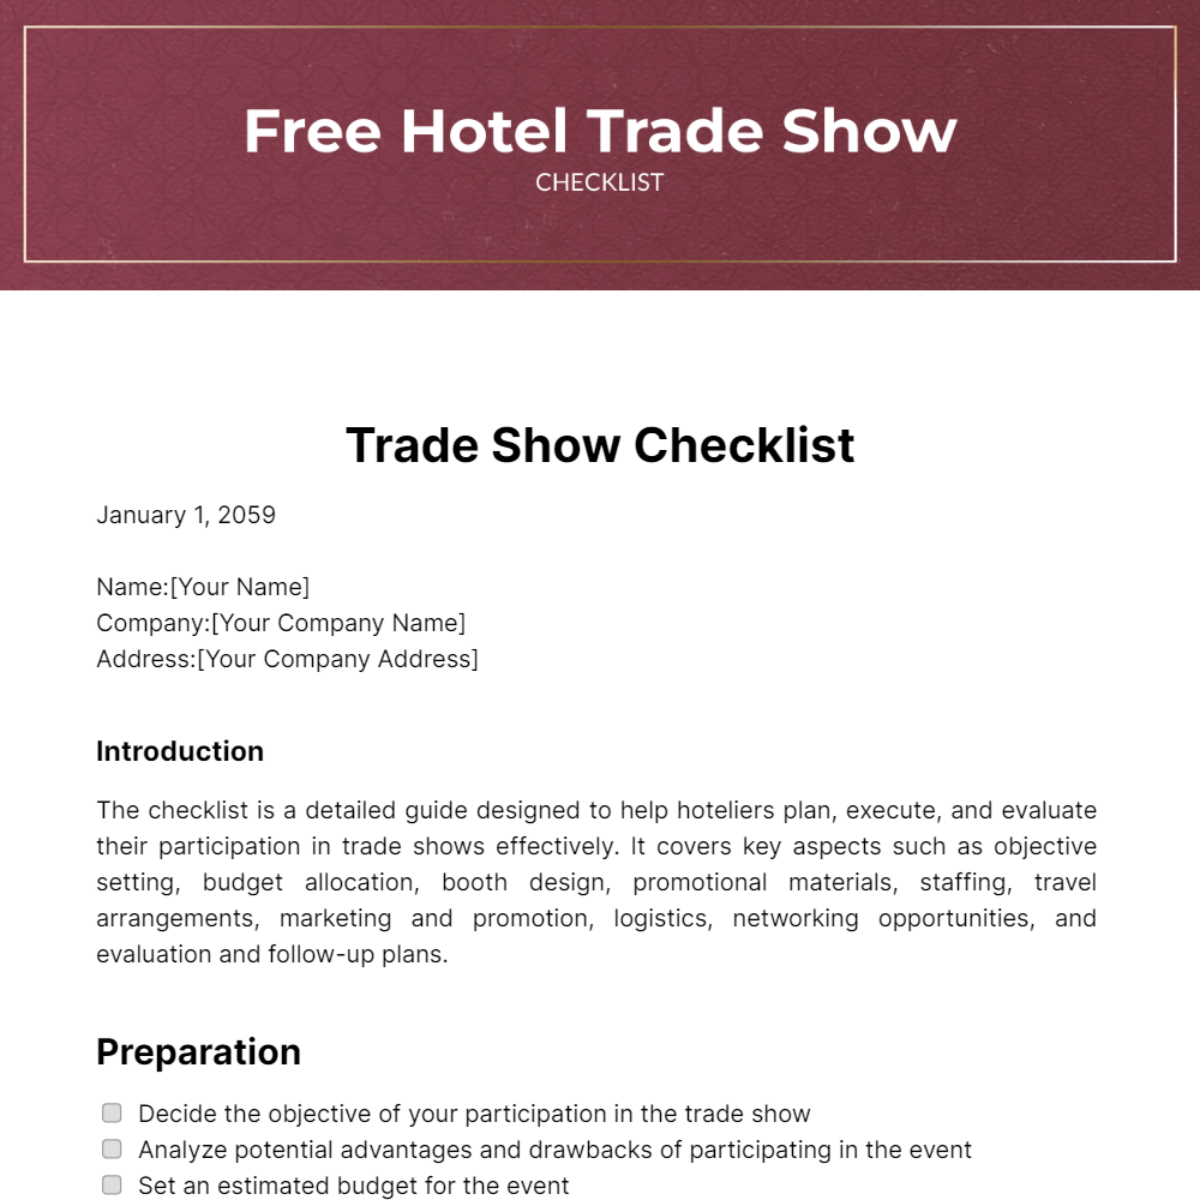 Free Hotel Trade Show Checklist Template